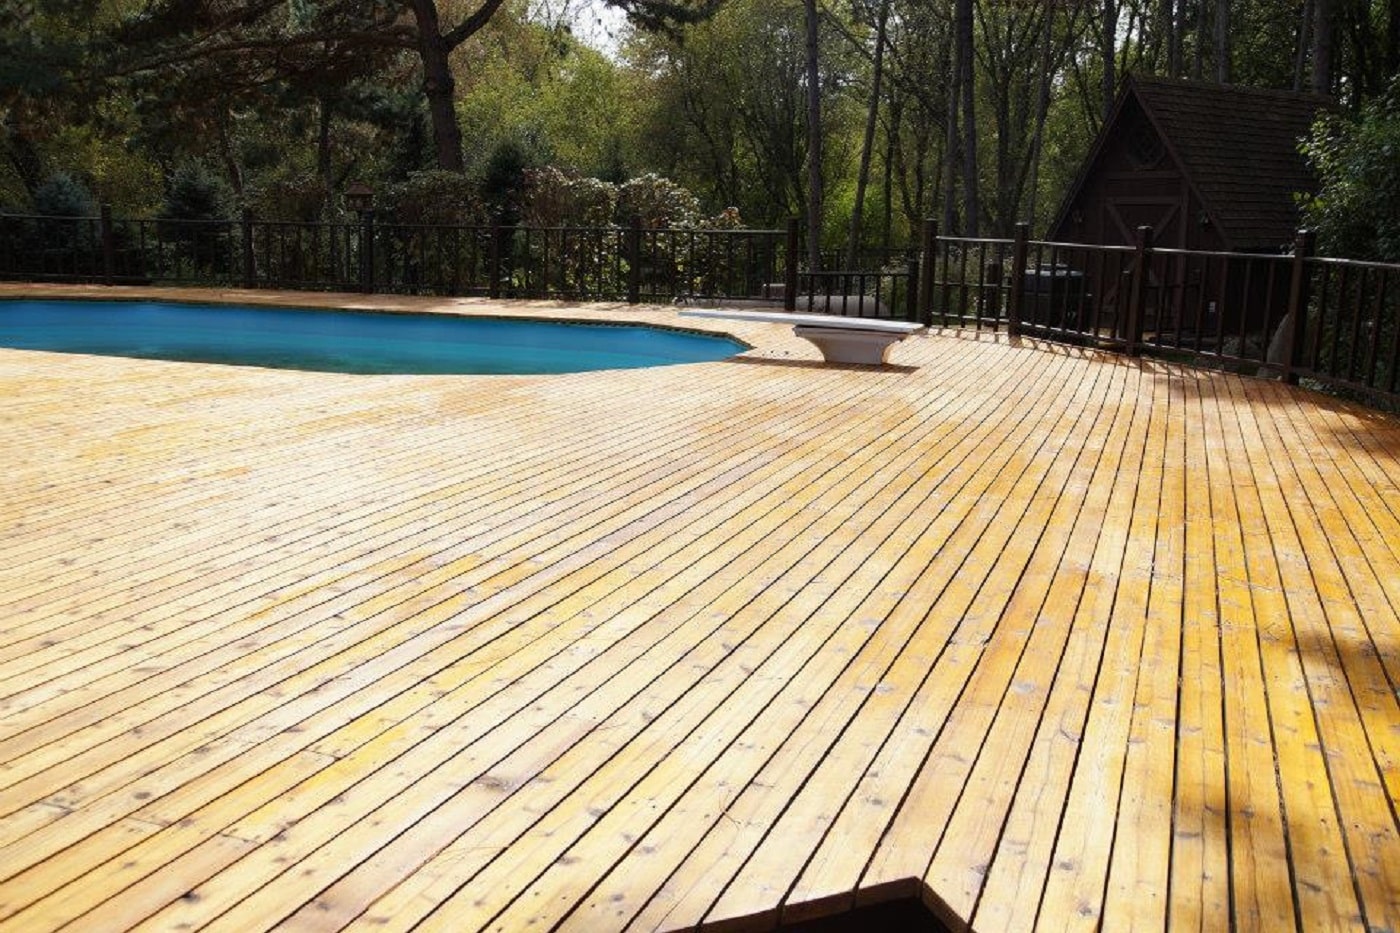 Cedar deck boards around a swimming pool.